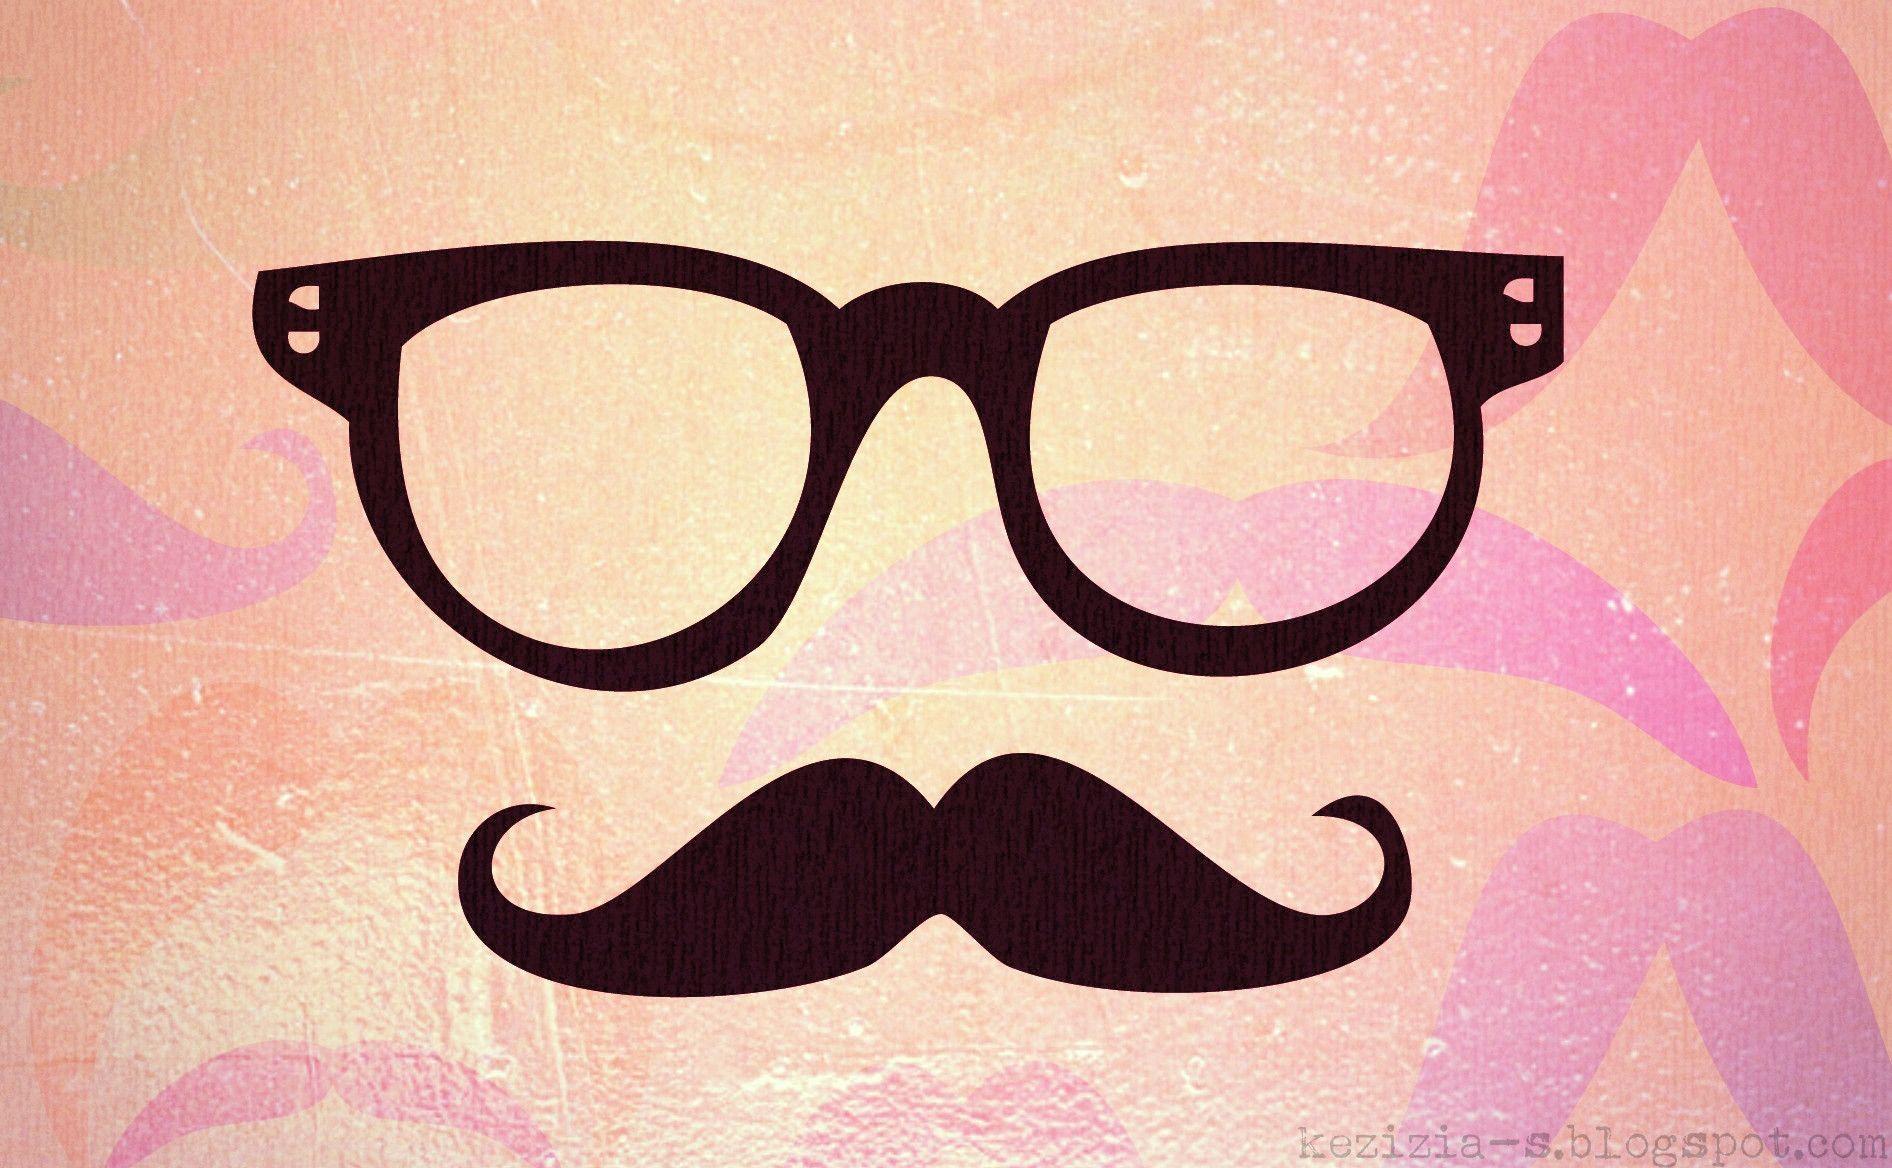 Mustache wallpaper wallpaper free download 1892×1168 Mustache